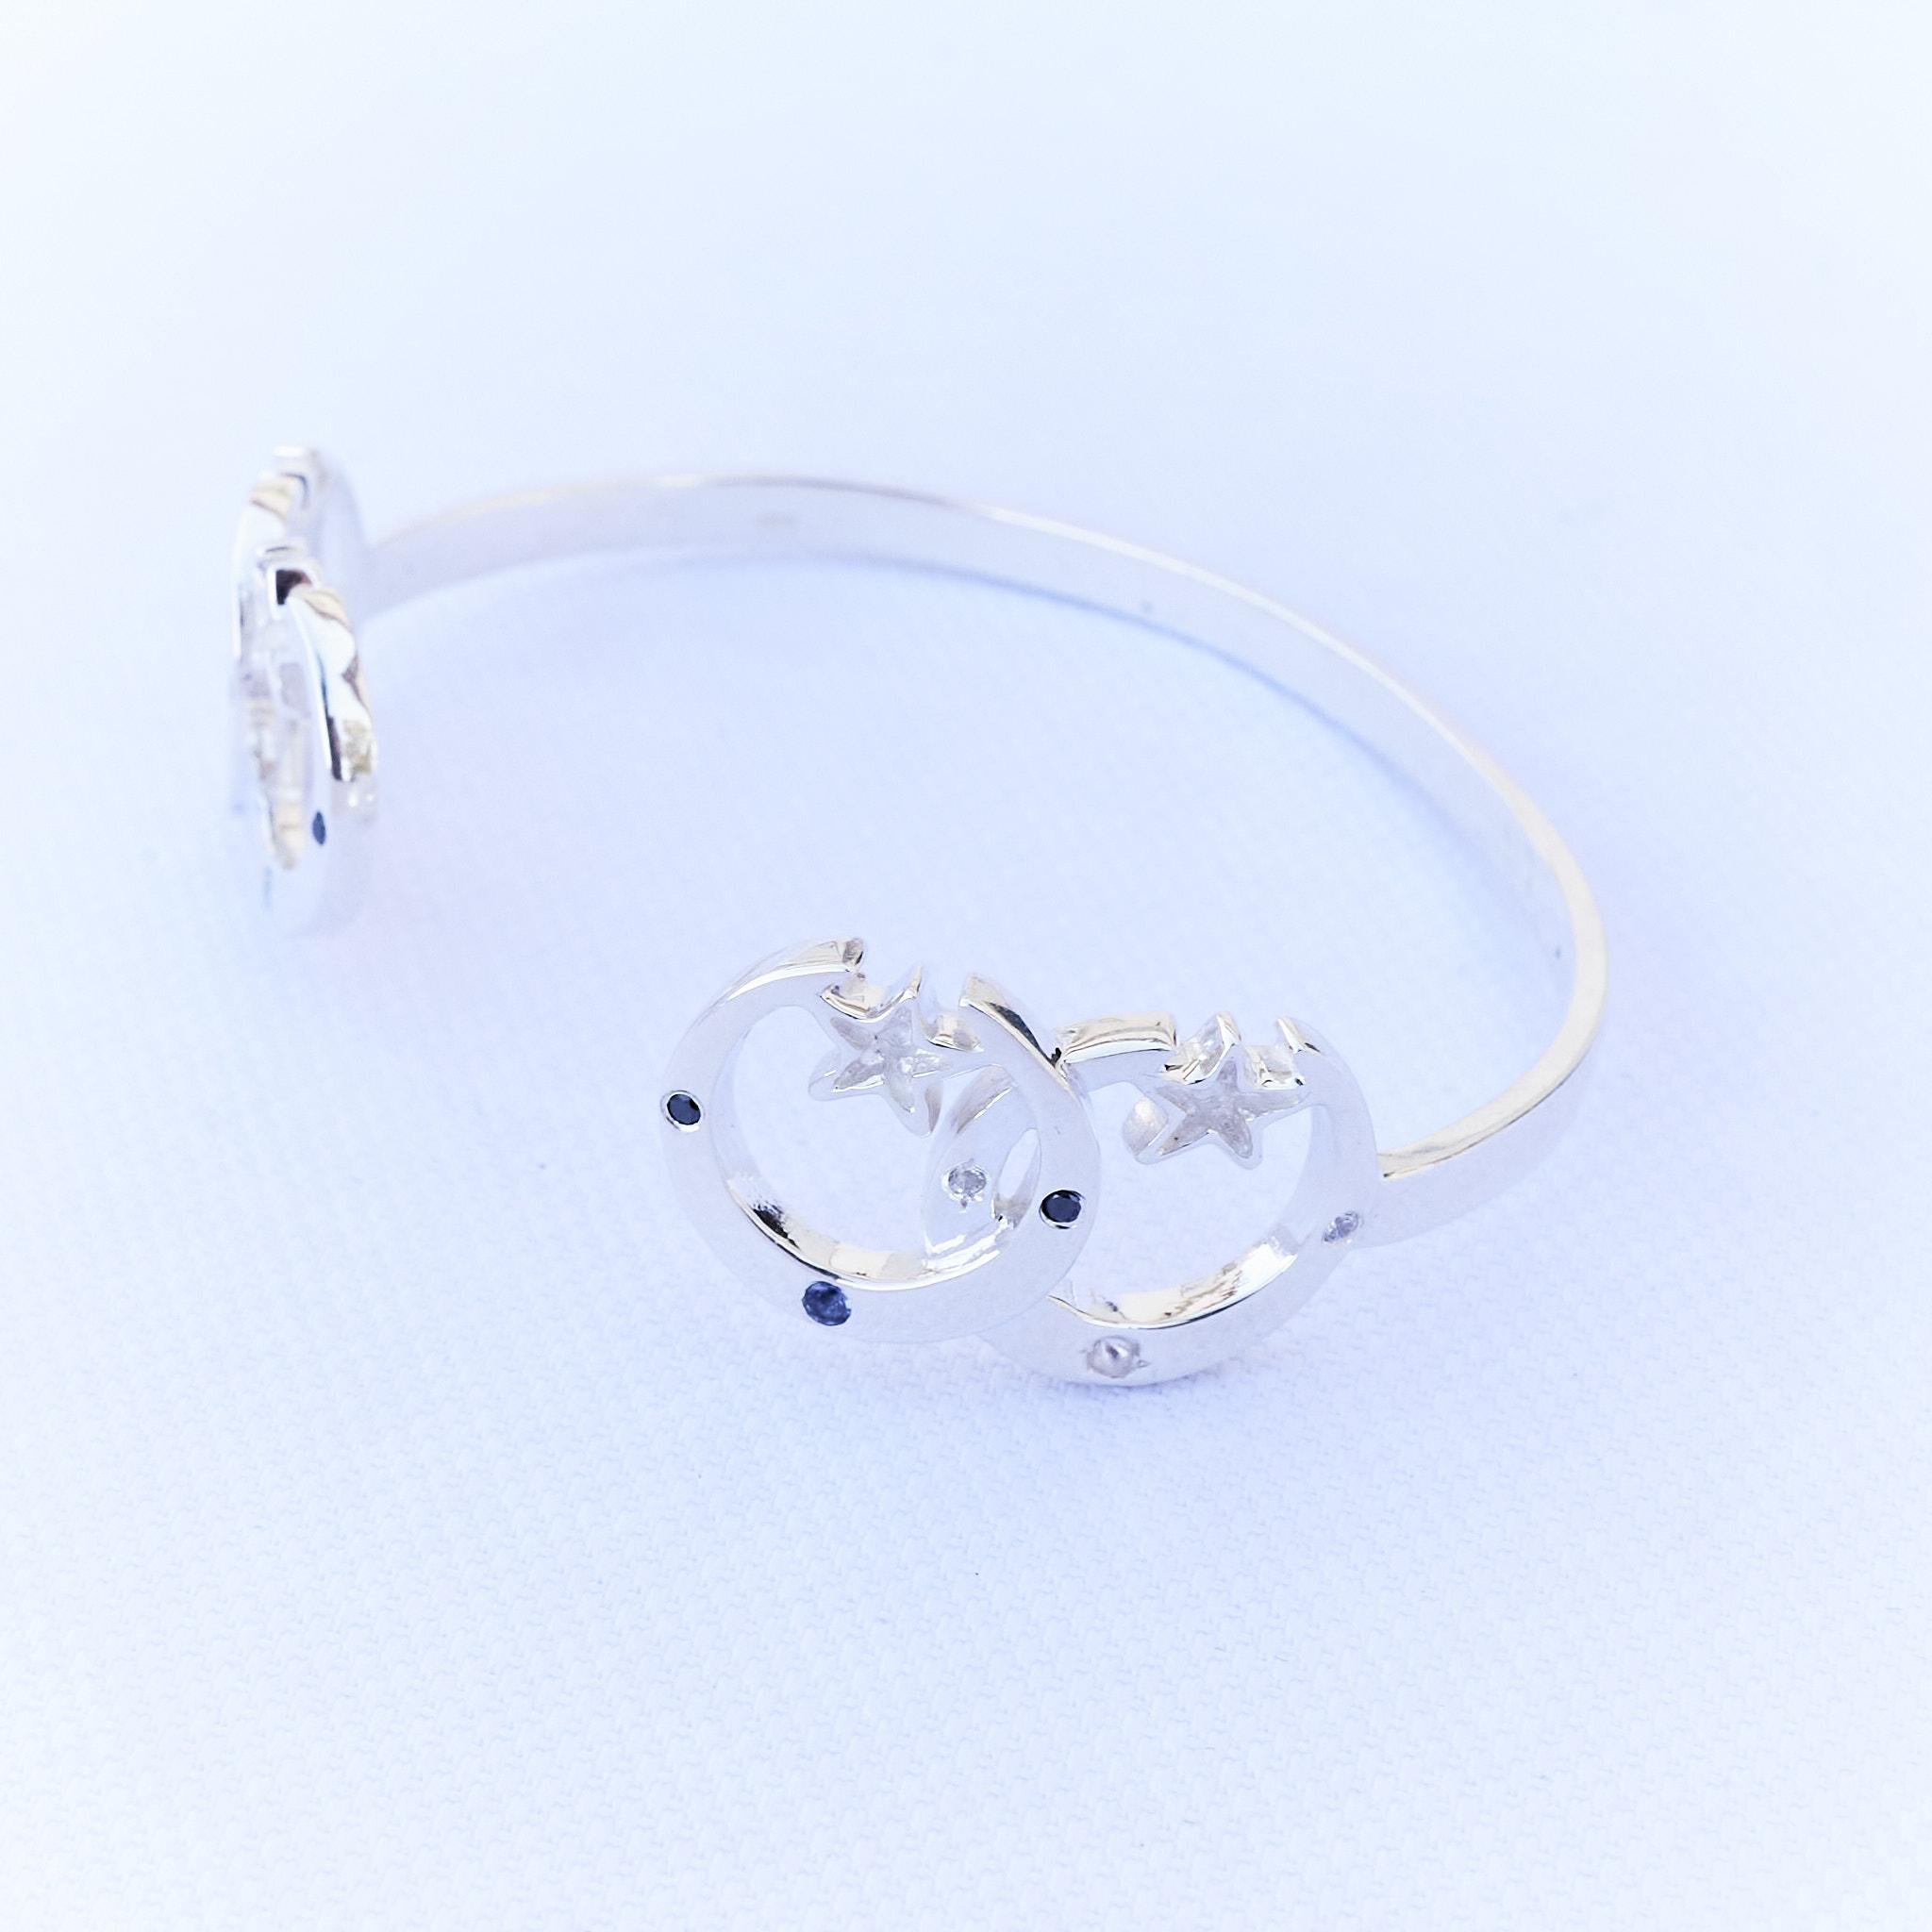 Brilliant Cut Black Diamond Toumaline Iolite Crescent Moon Bangle Bracelet Silver J Dauphin For Sale